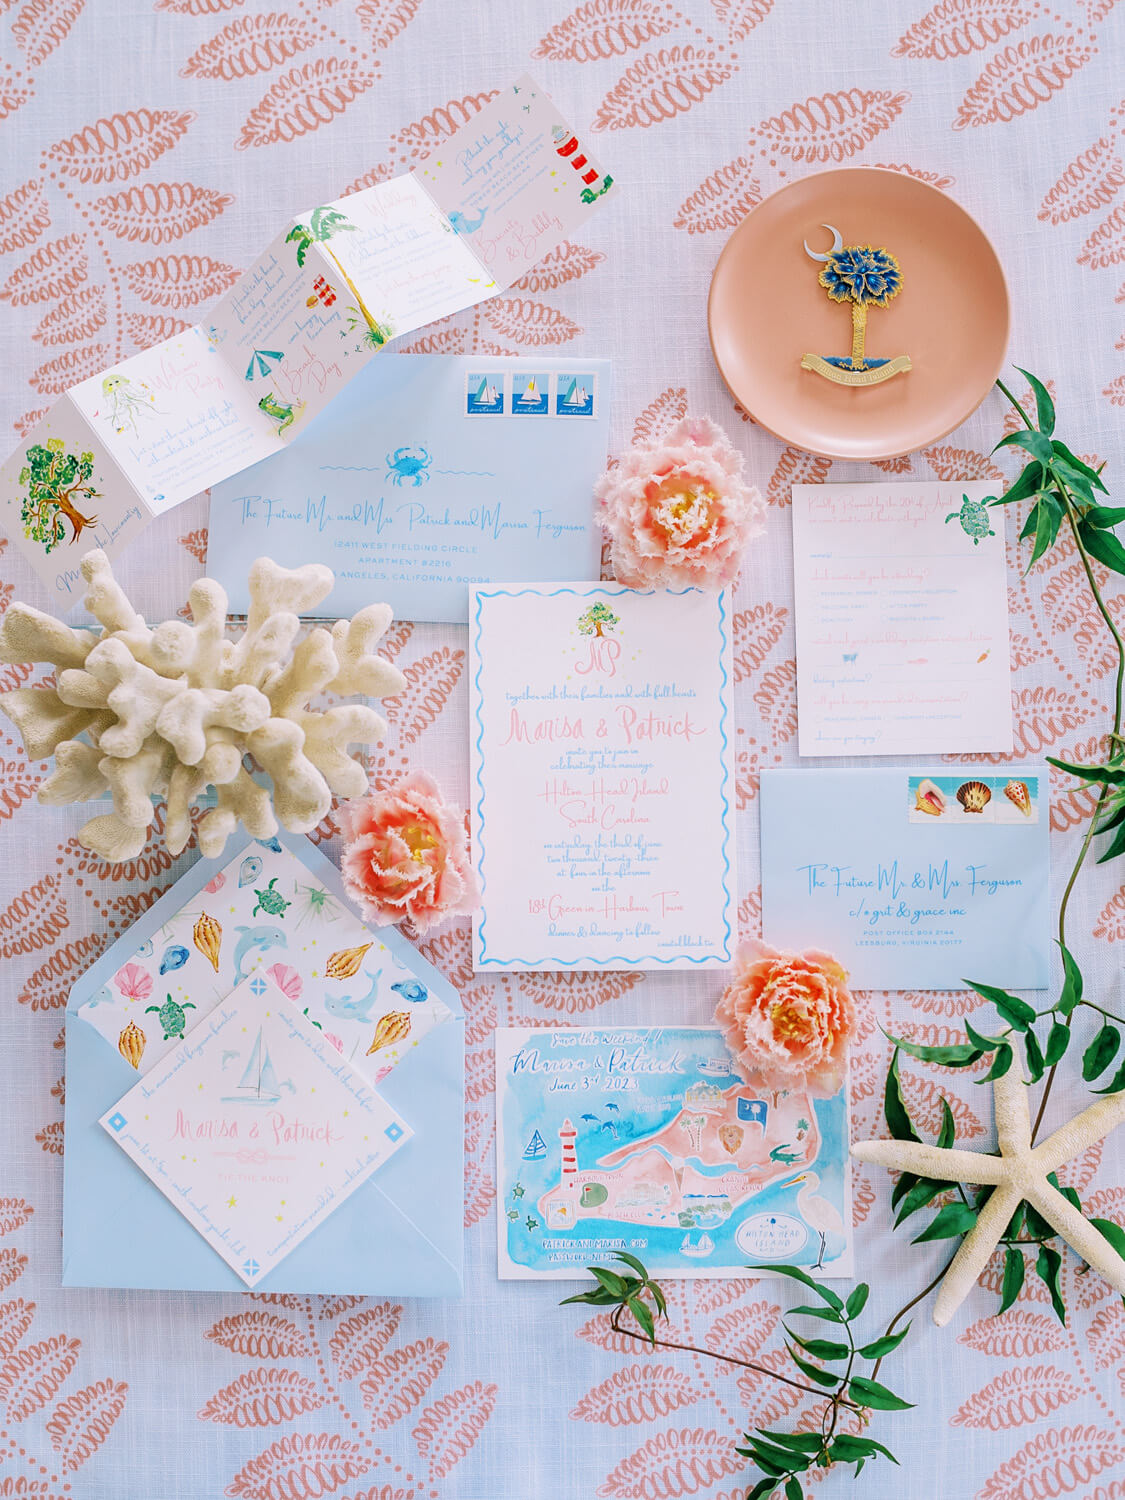 coastal inspired wedding invitations for a beachside wedding